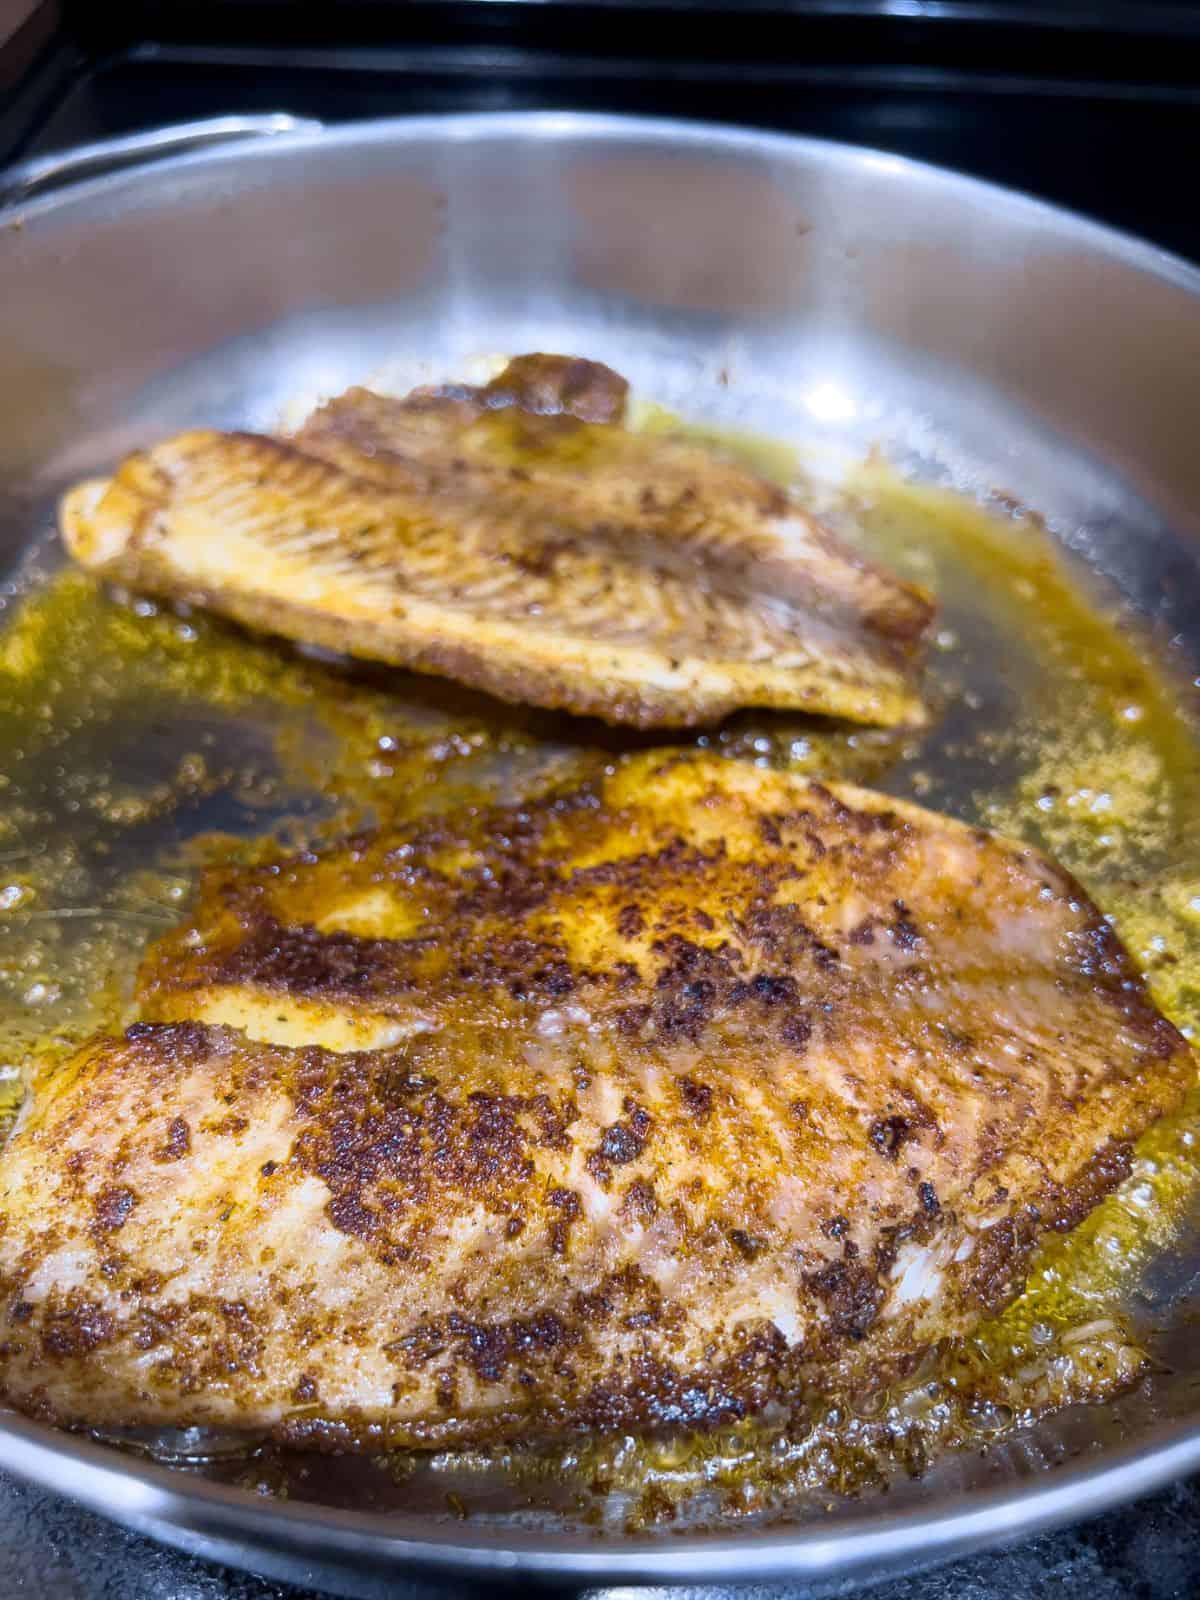 Frying the blackened tilapia fish fillet.